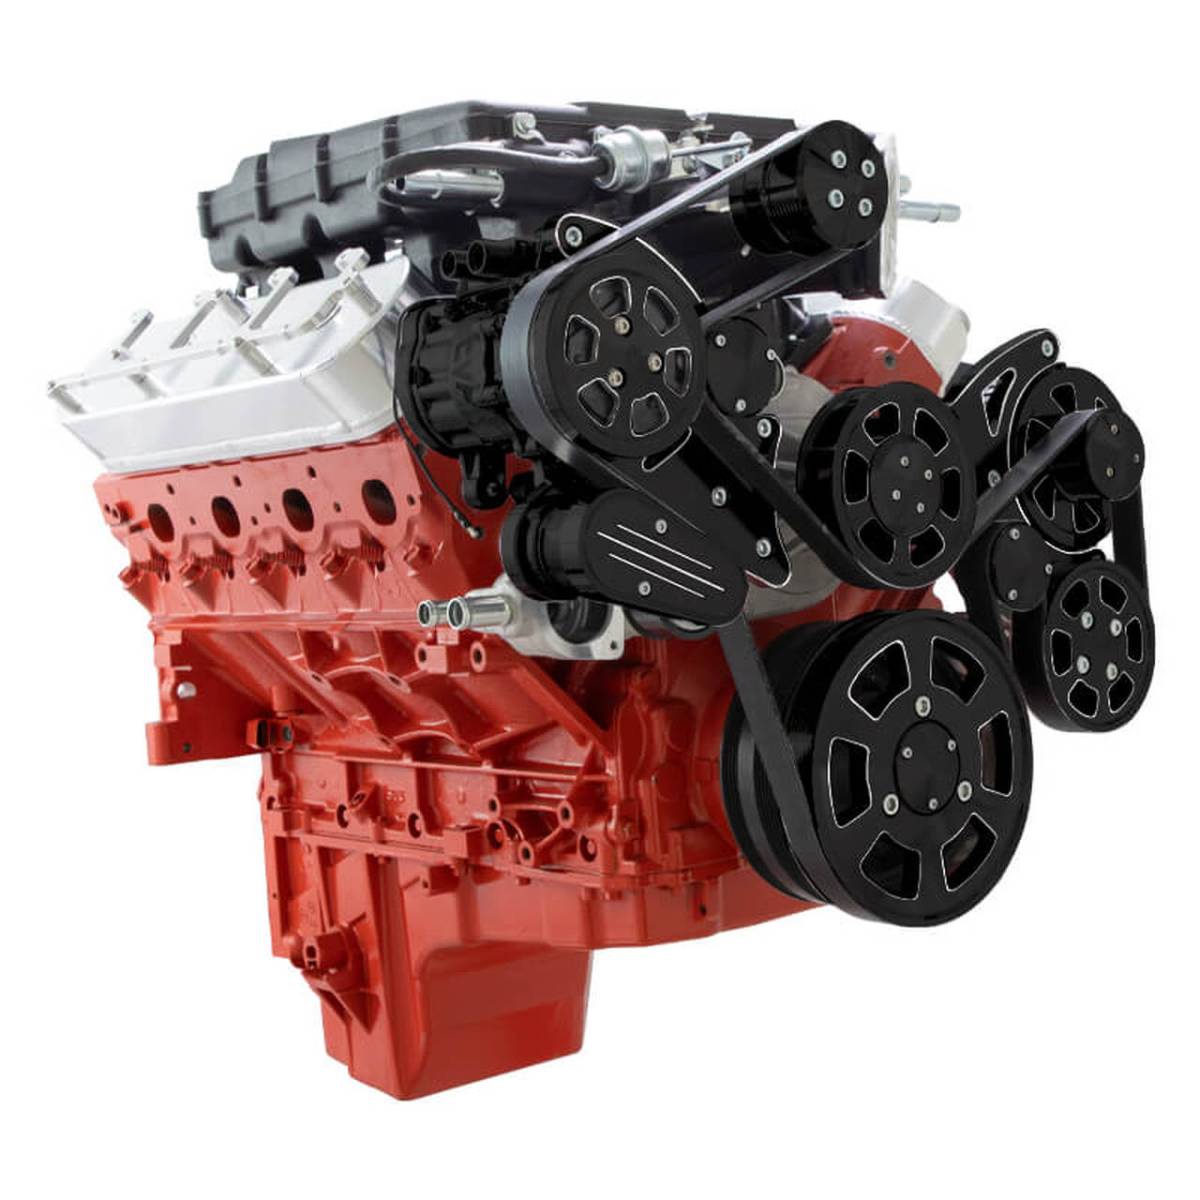 CVF Racing - CVF Wraptor Chevy LS Engine Magnuson Serpentine Bracket System with Alternator Only - Black Diamond Finish - Image 1